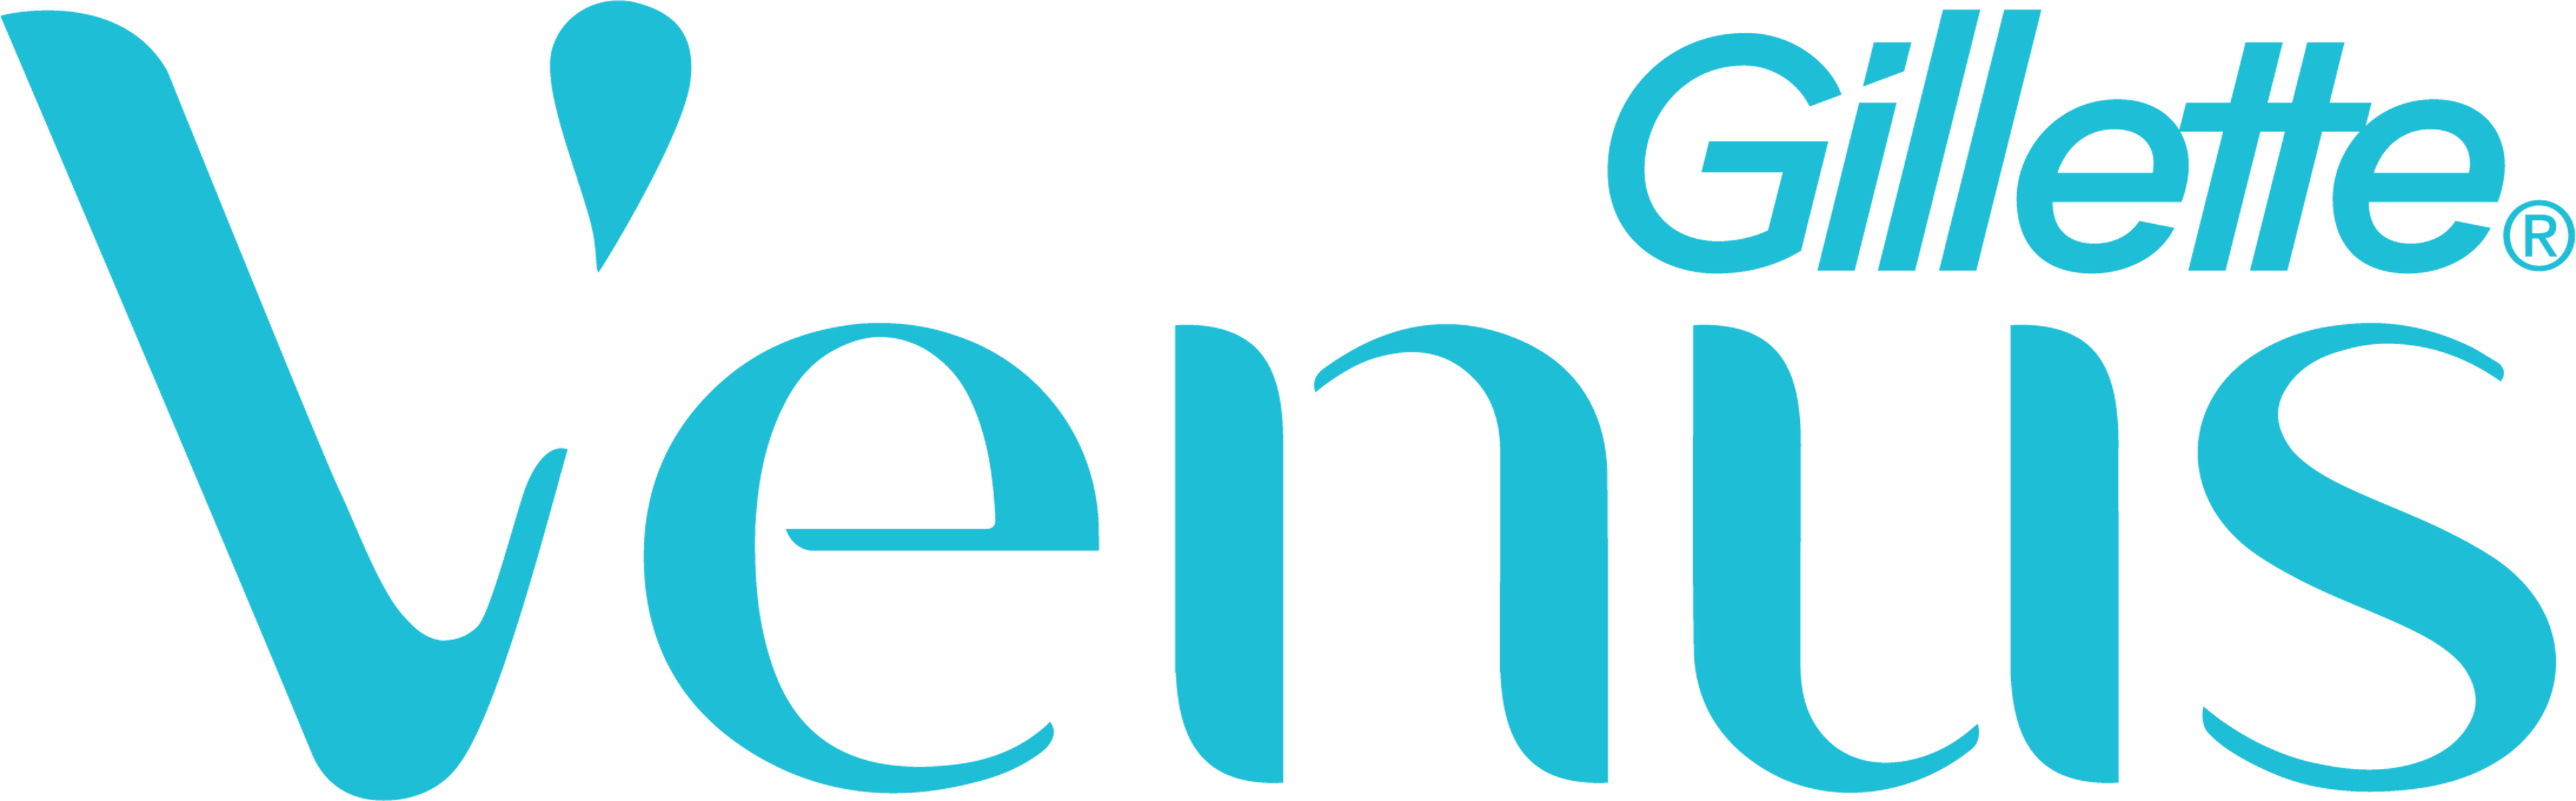 Venus logotype